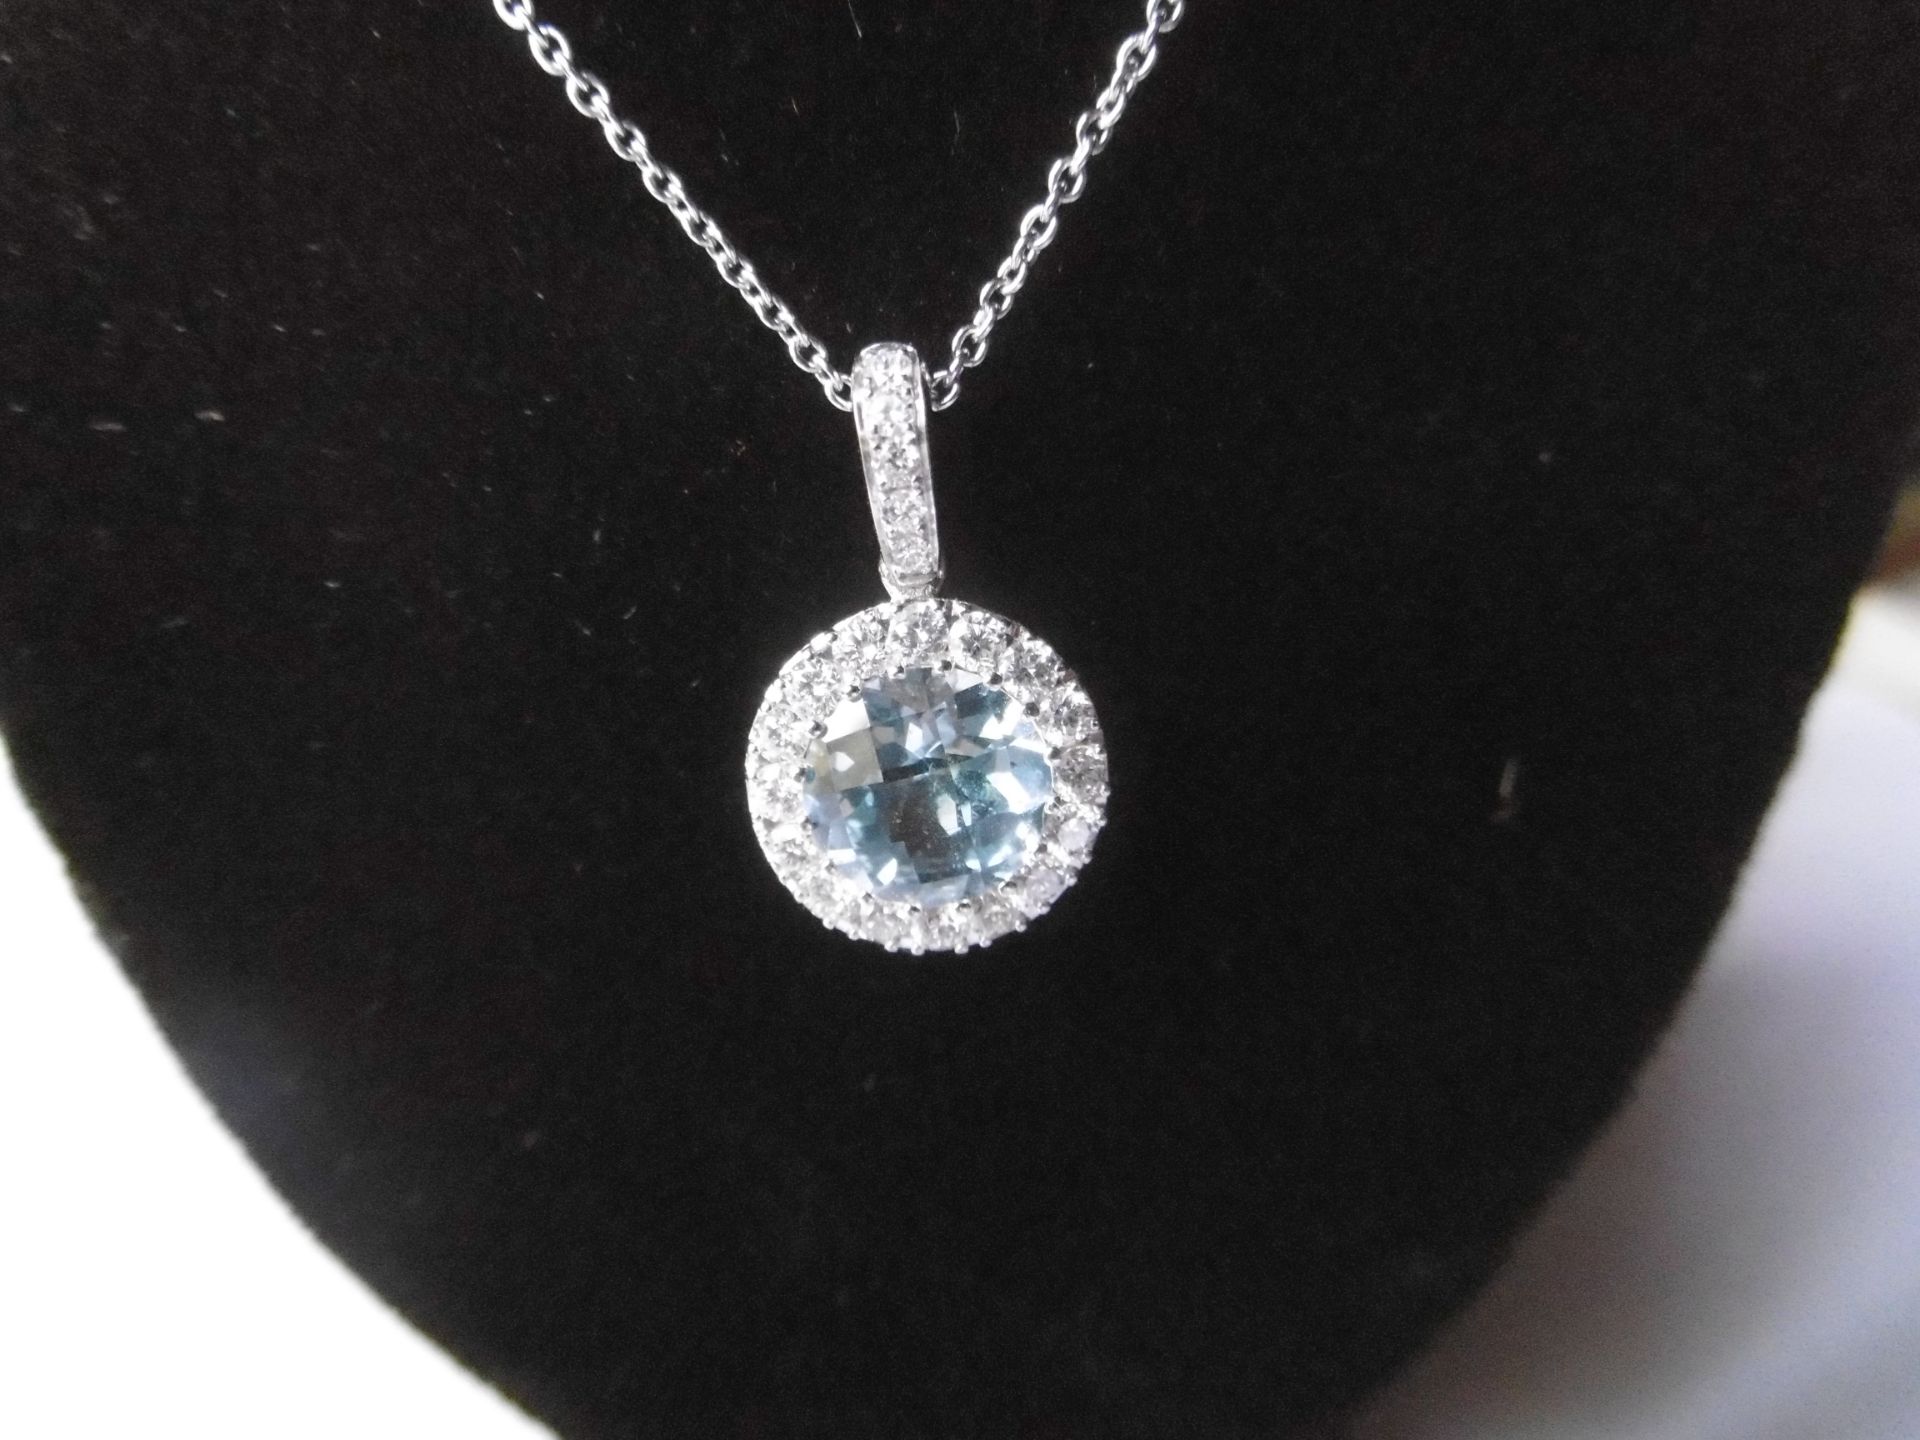 Very Pretty Topaz and Diamond pendant - Image 3 of 5